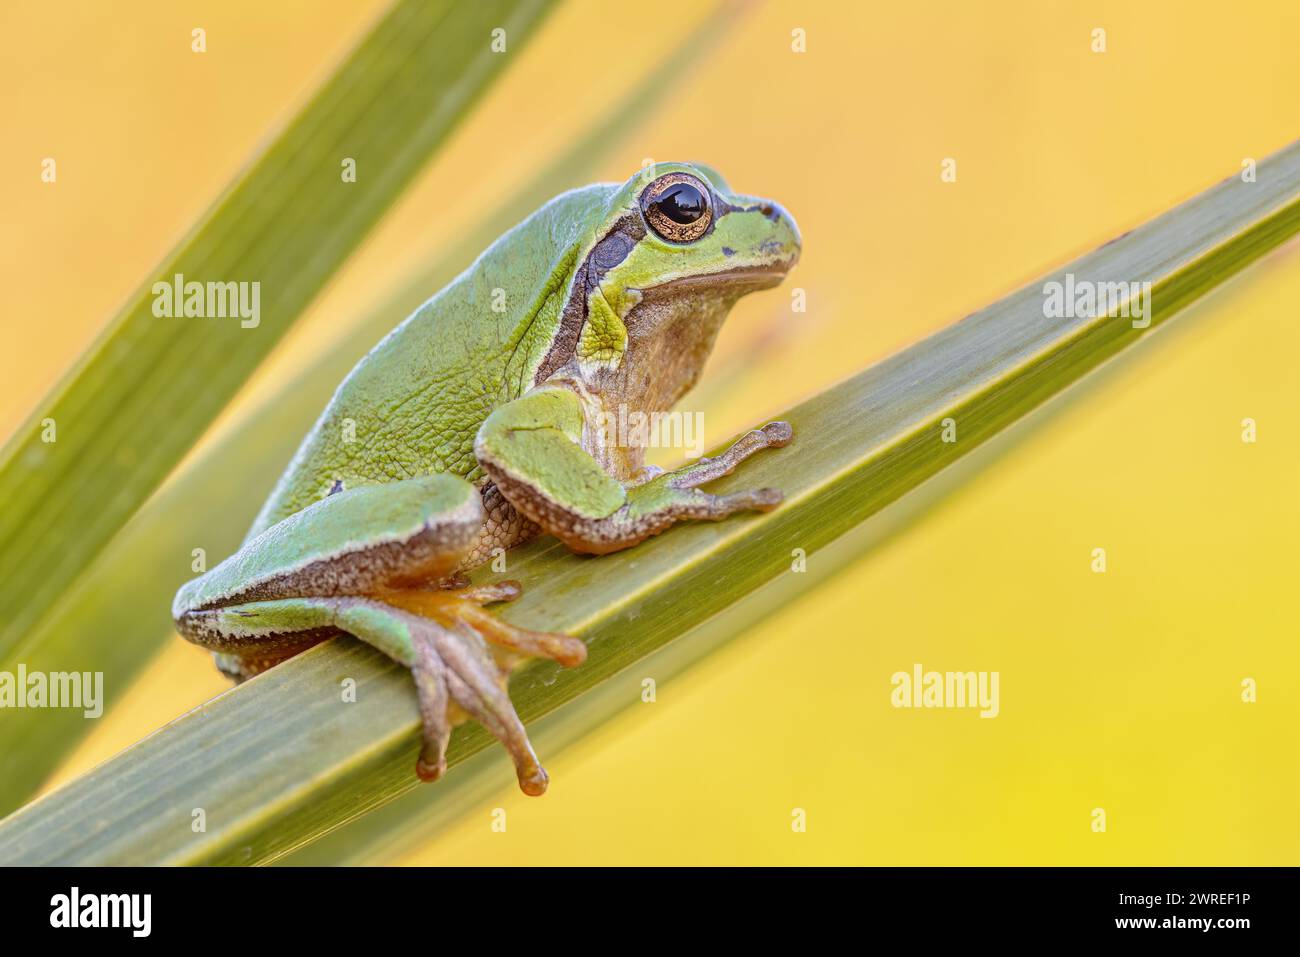 Green European tree frog (Hyla arborea) climbing in plant. Wildlife scene of nature in Europe. Wildlife scene of nature in Europe. Stock Photo